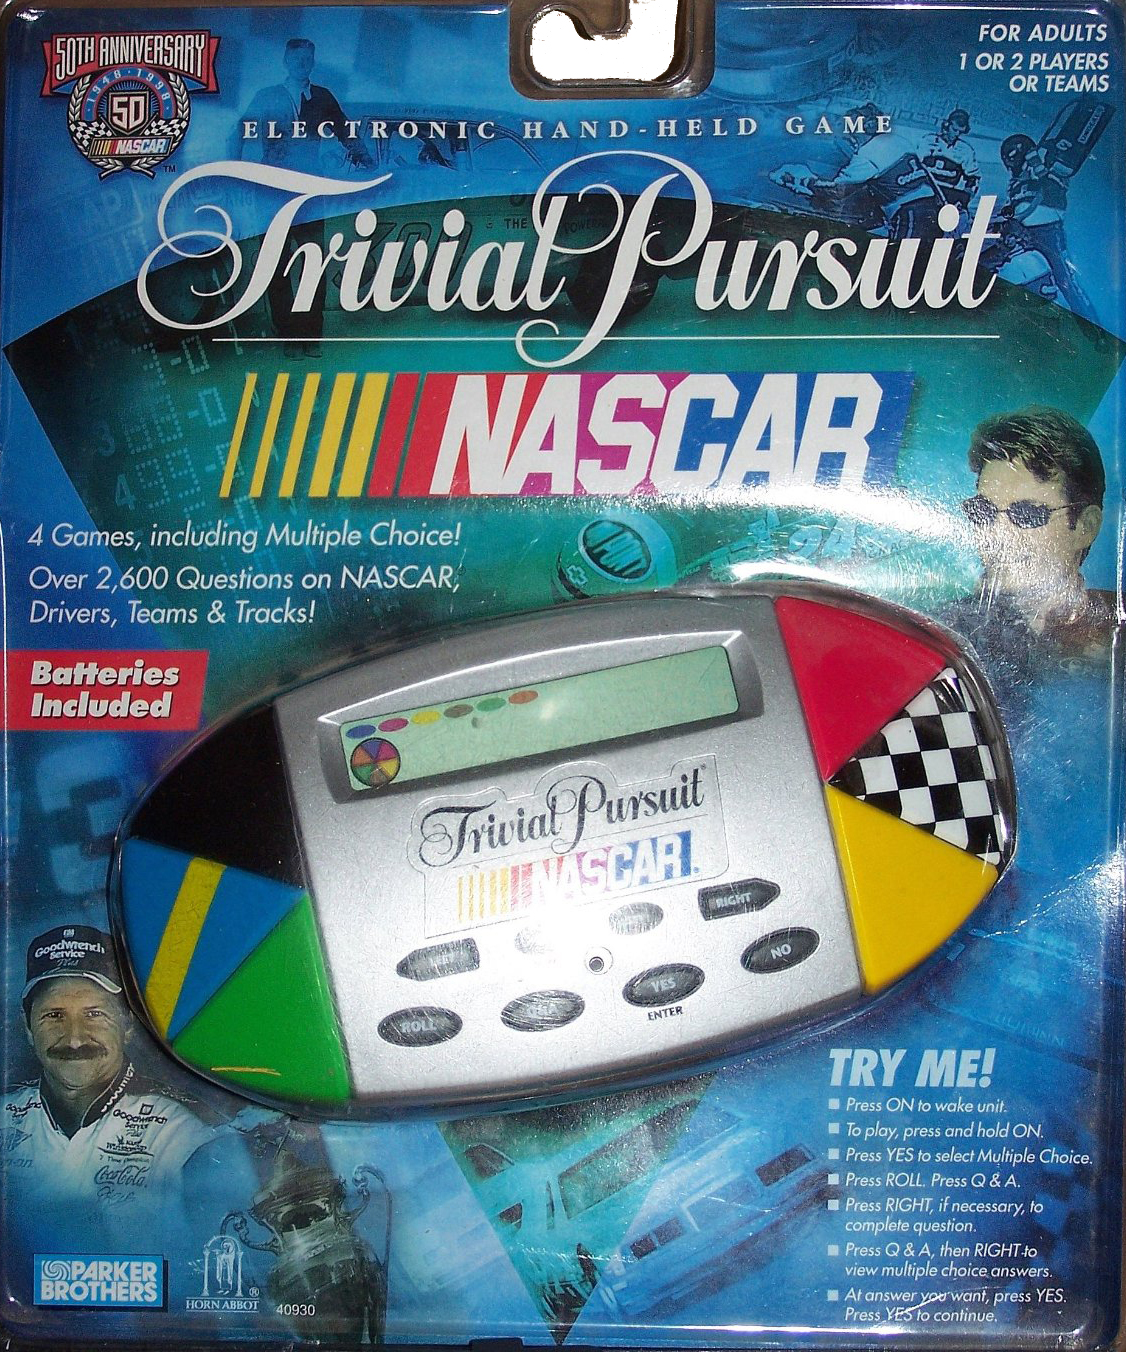 NASCAR Trivial Pursuit Hand-held Game